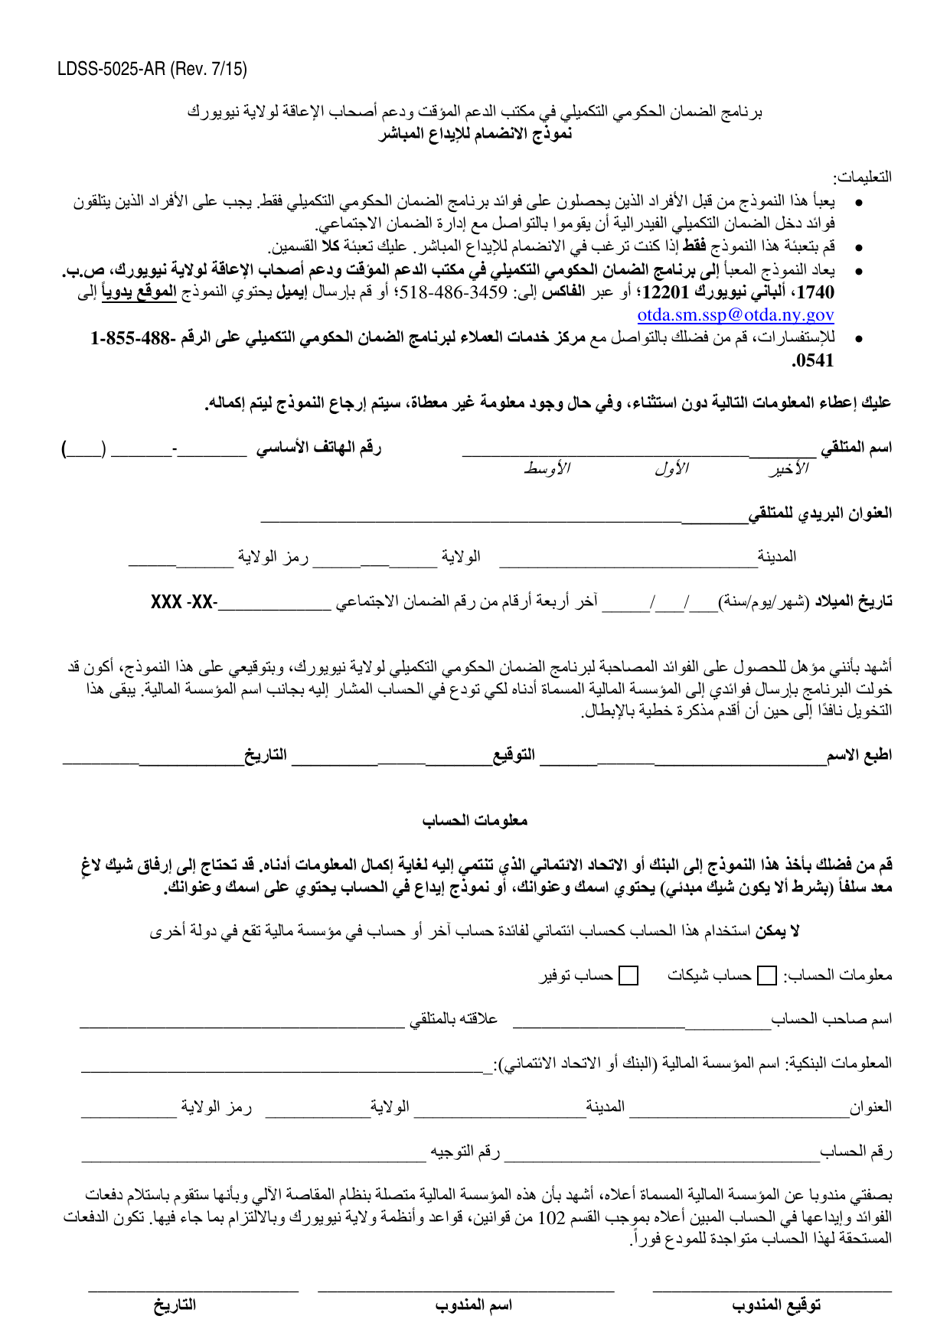 Form LDSS-5025 Direct Deposit Cancellation Form - New York (Arabic), Page 1